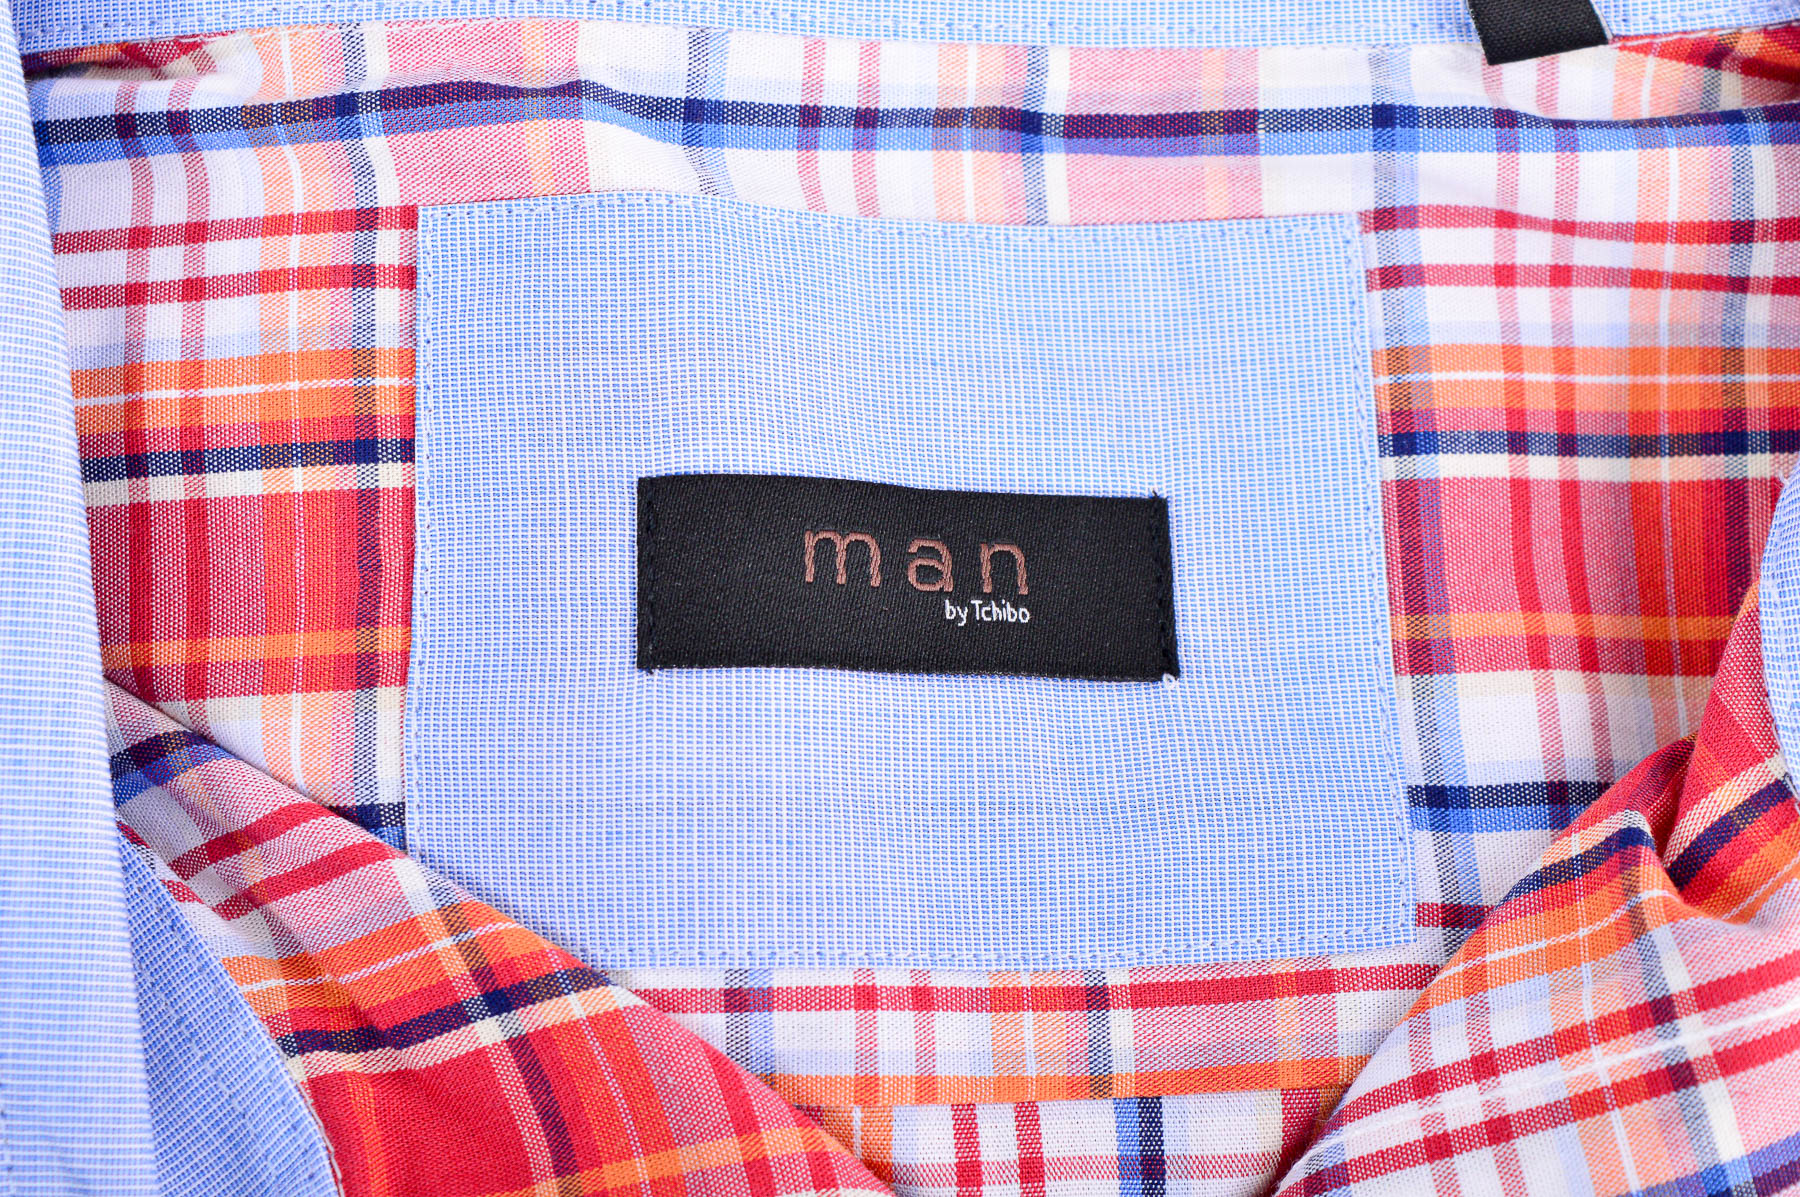 Men's shirt - Man by Tchibo - 2